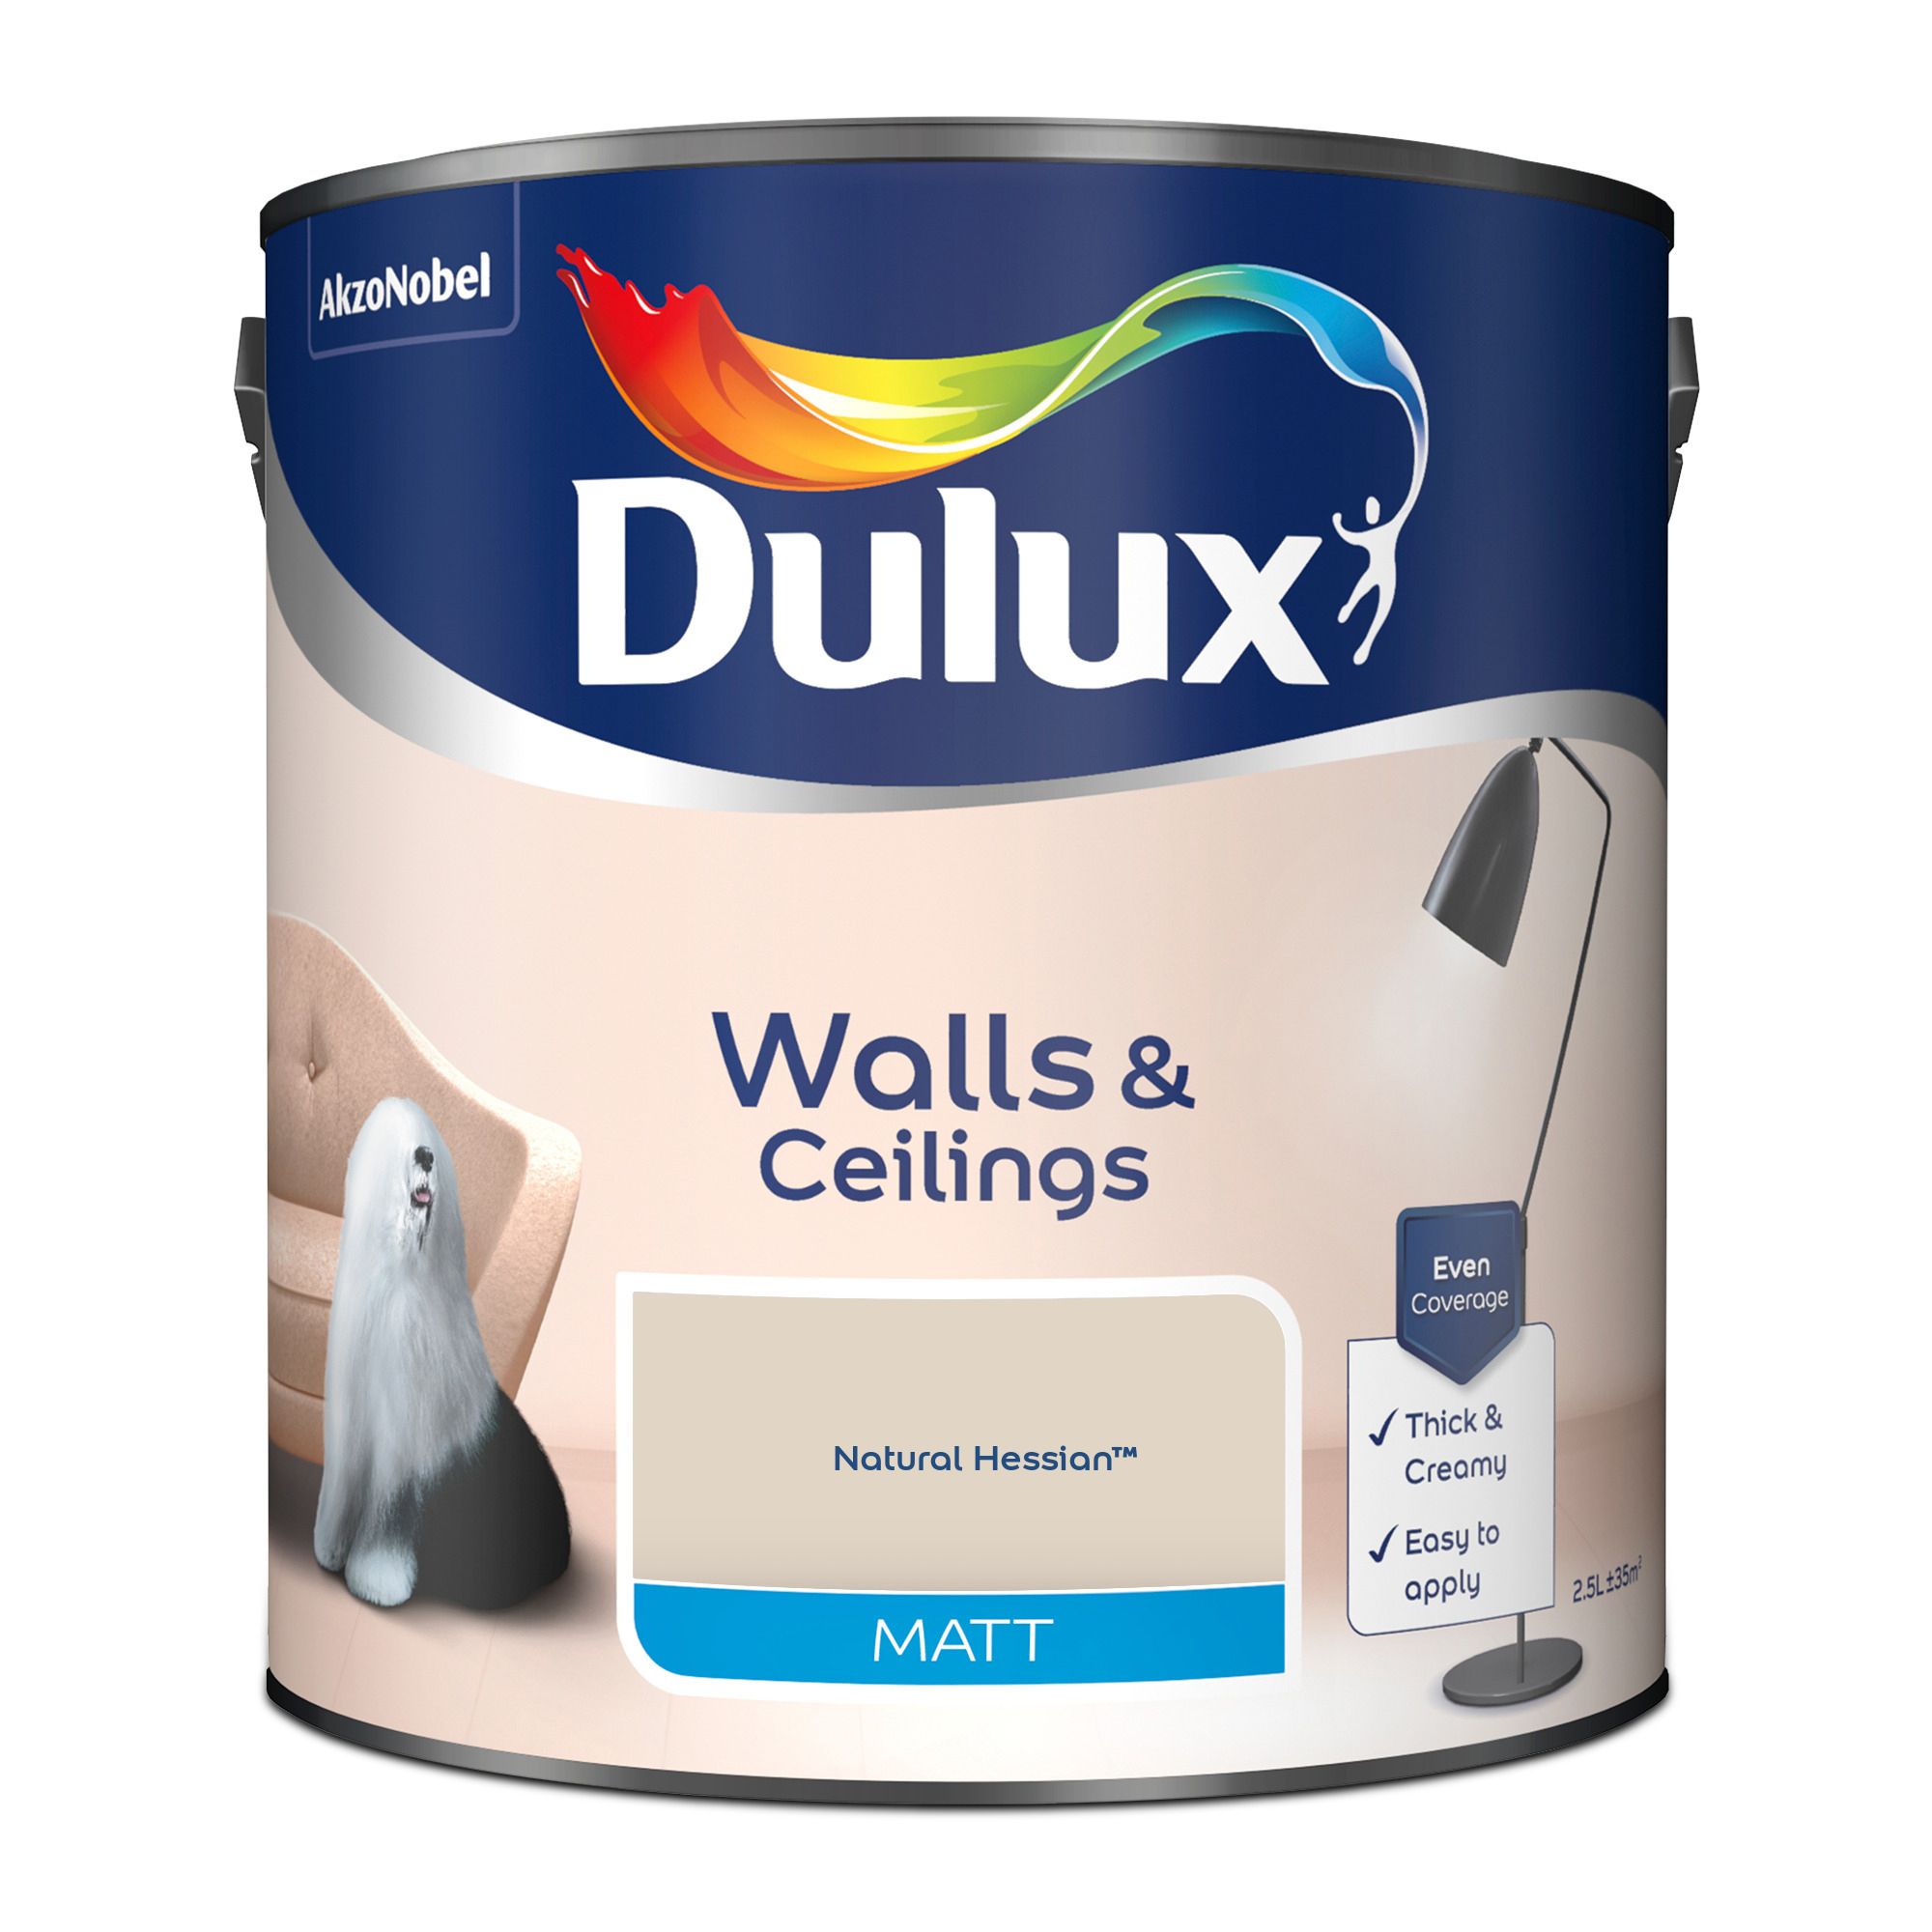 Dulux Walls & ceilings Natural hessian Matt Emulsion paint, 2.5L